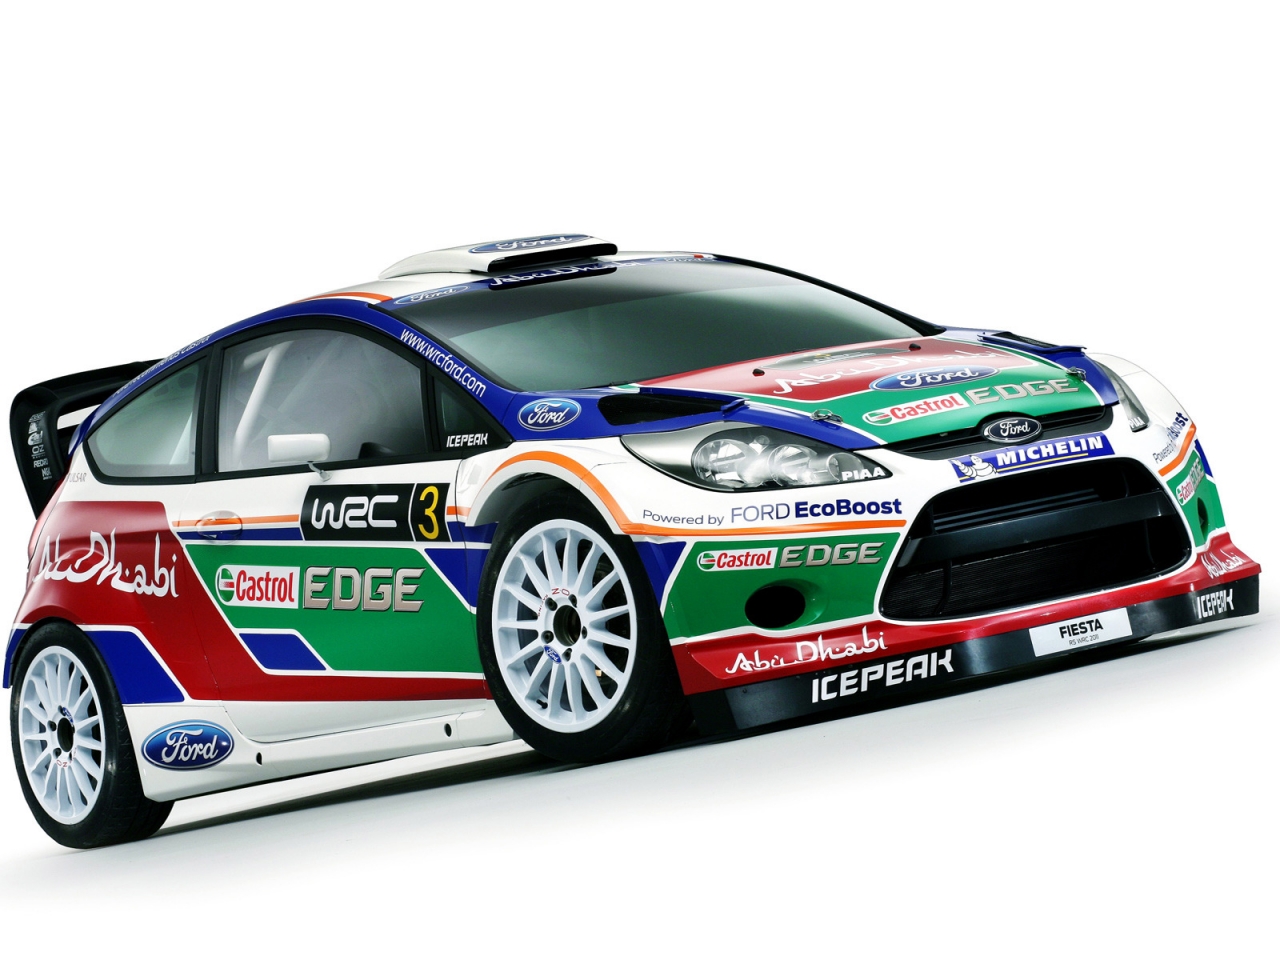 Ford Fiesta WRC for 1280 x 960 resolution